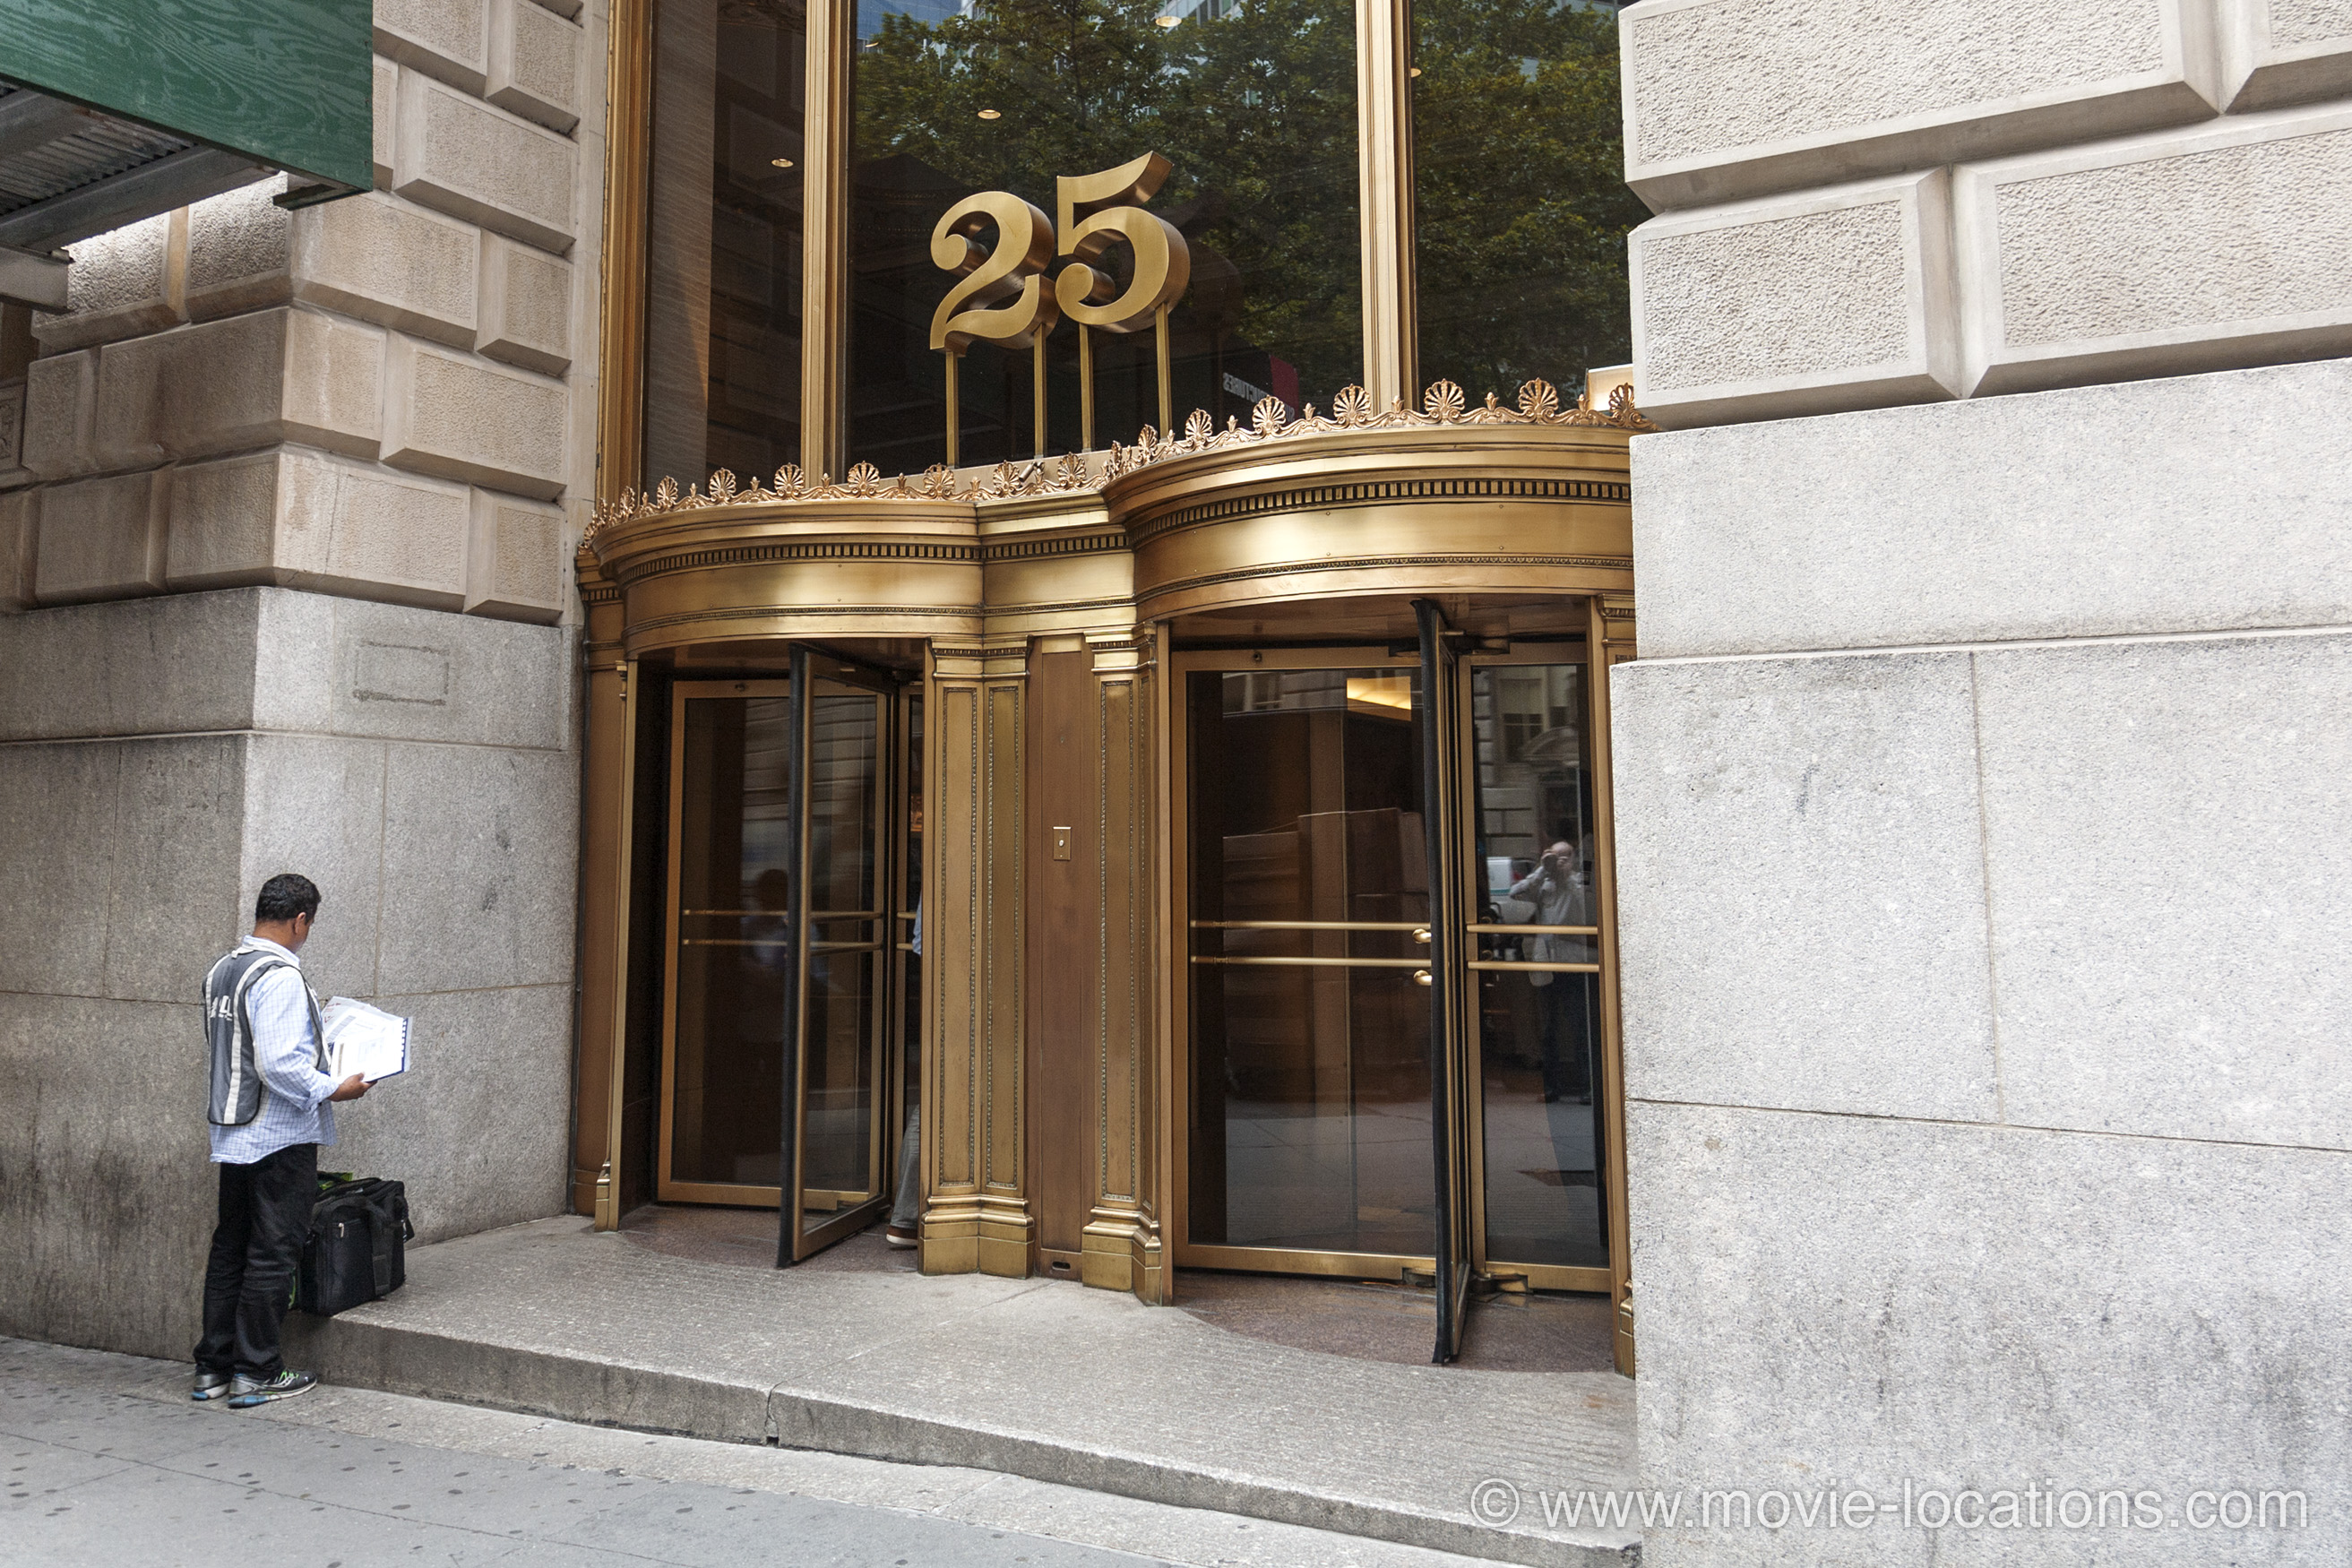 John Wick filming location: Cunard Building, Broadway, Financial District, New York